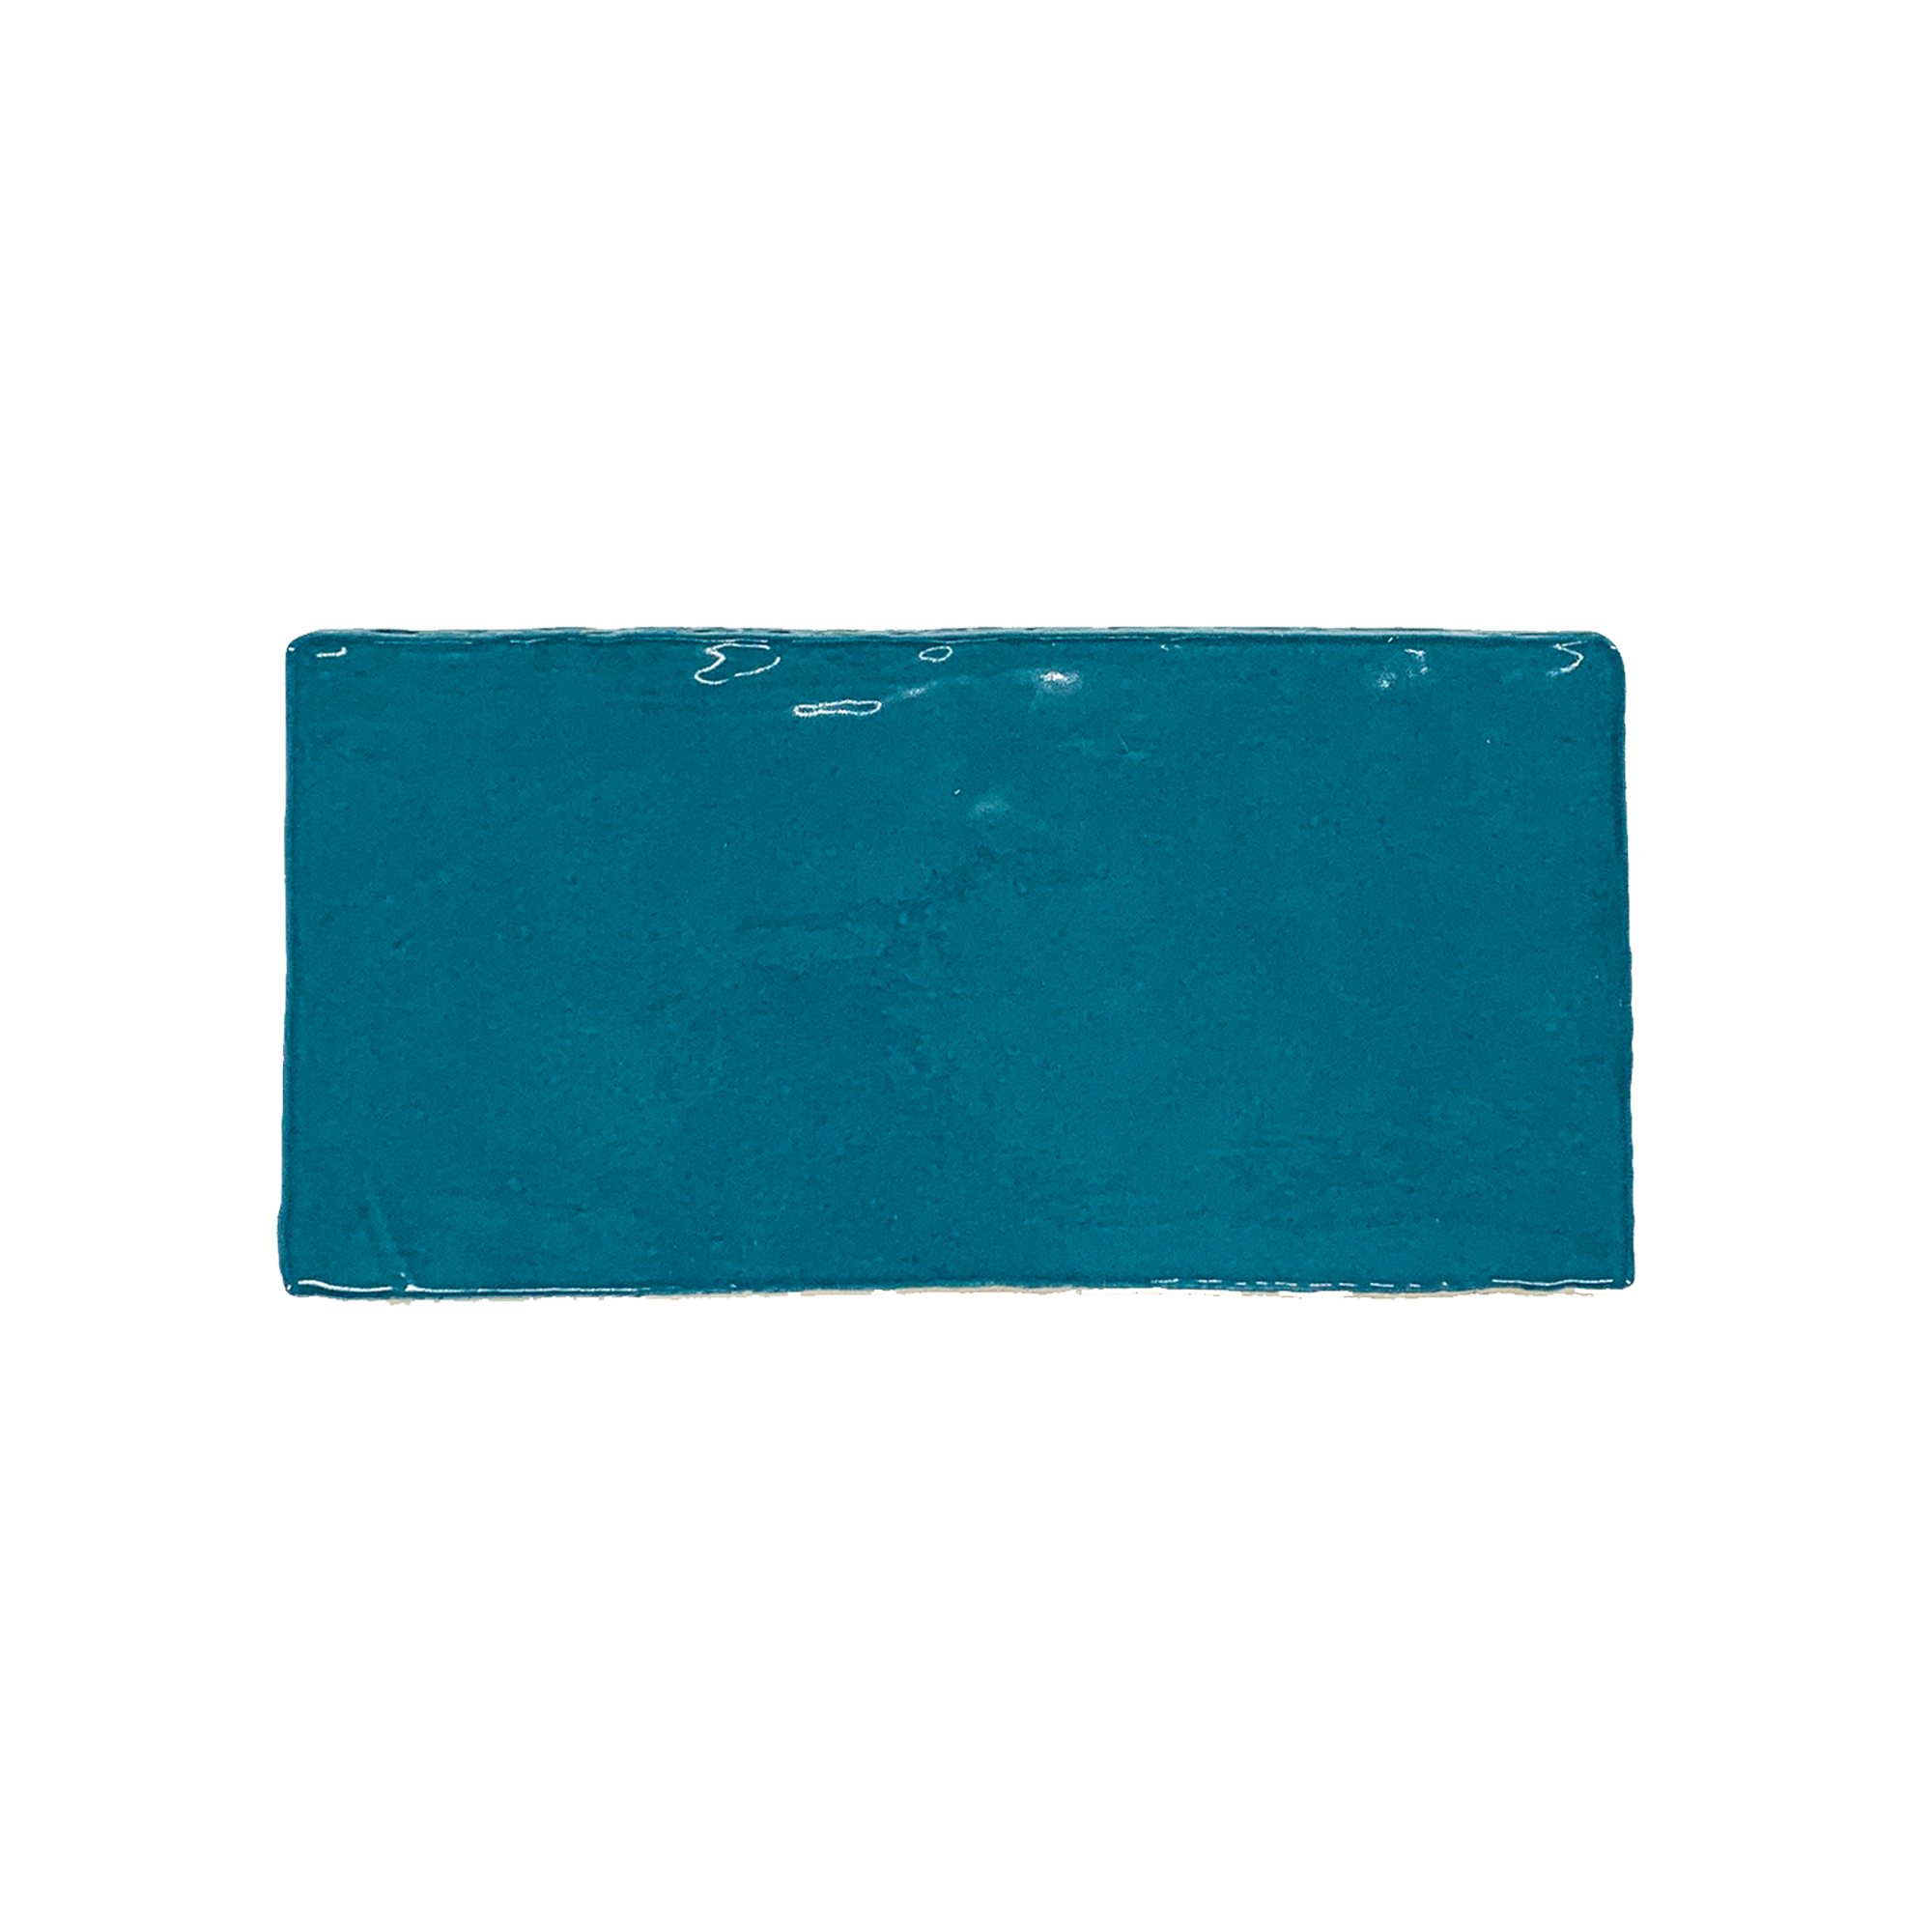 Elon Hampton Turquoise Ceramic Rectangle Wall Tile 3x6x0.375 Glossy BC701G Surface Group International Product